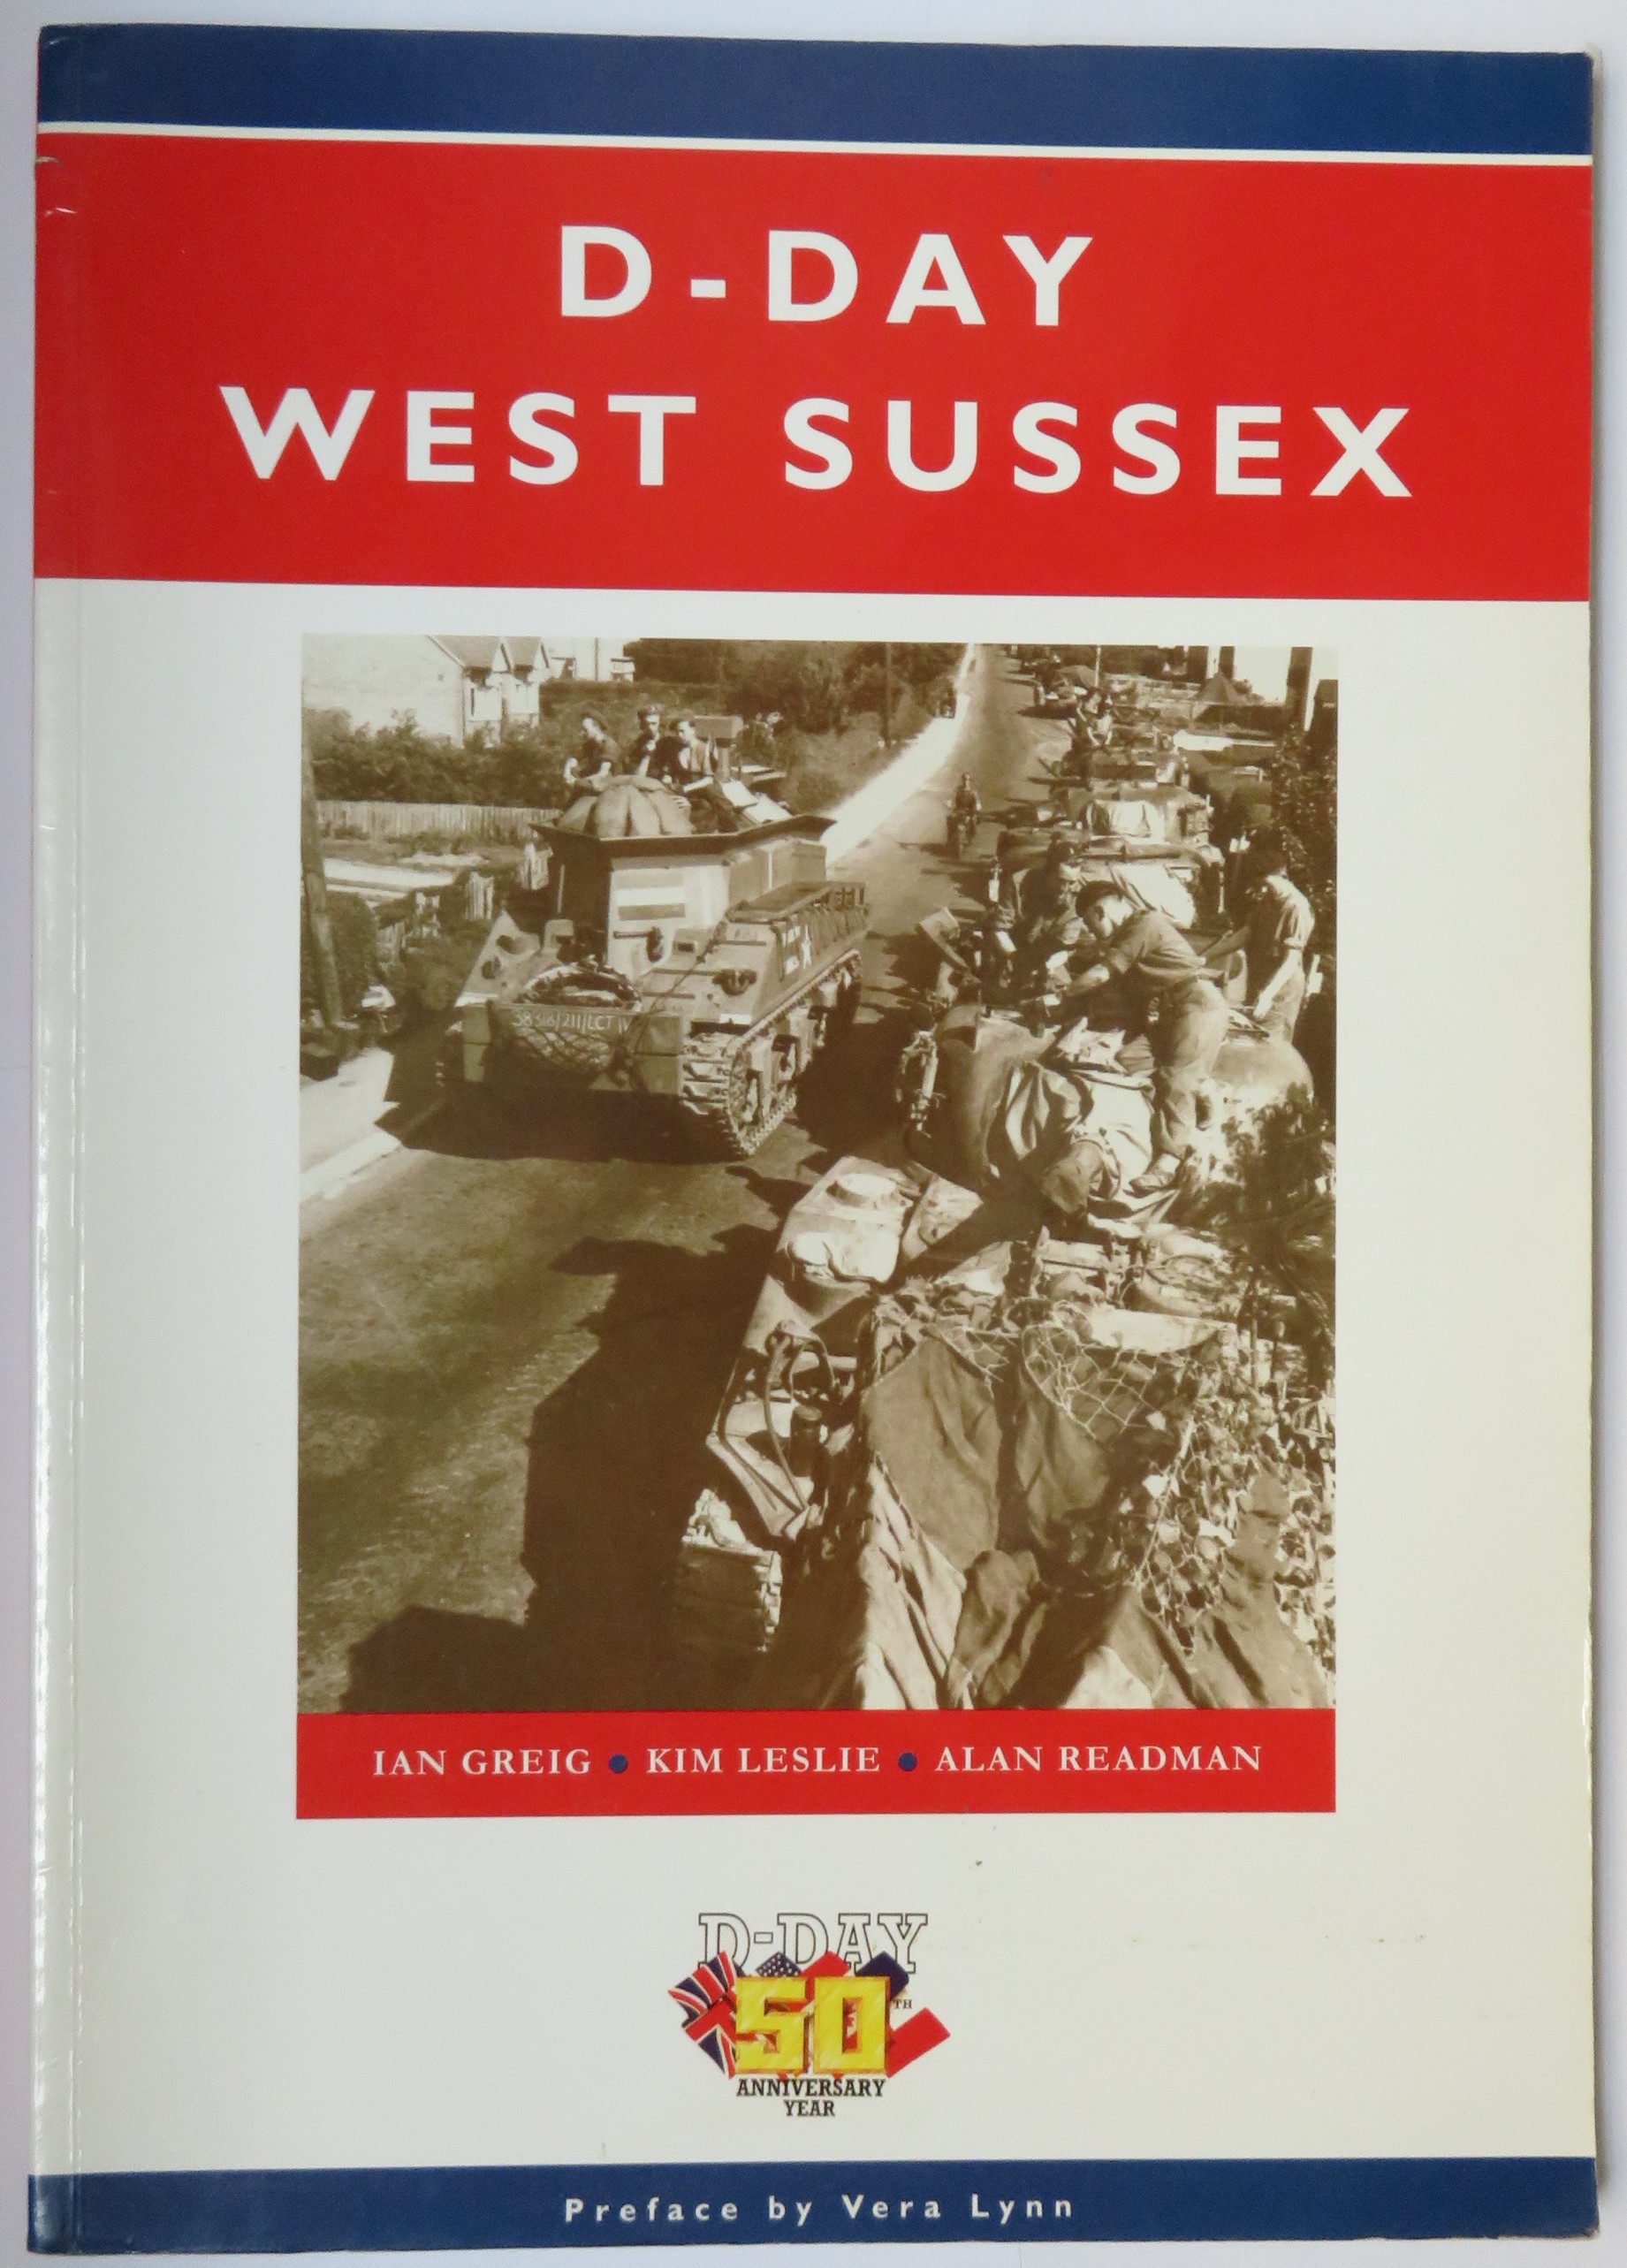 D-Day West Sussex